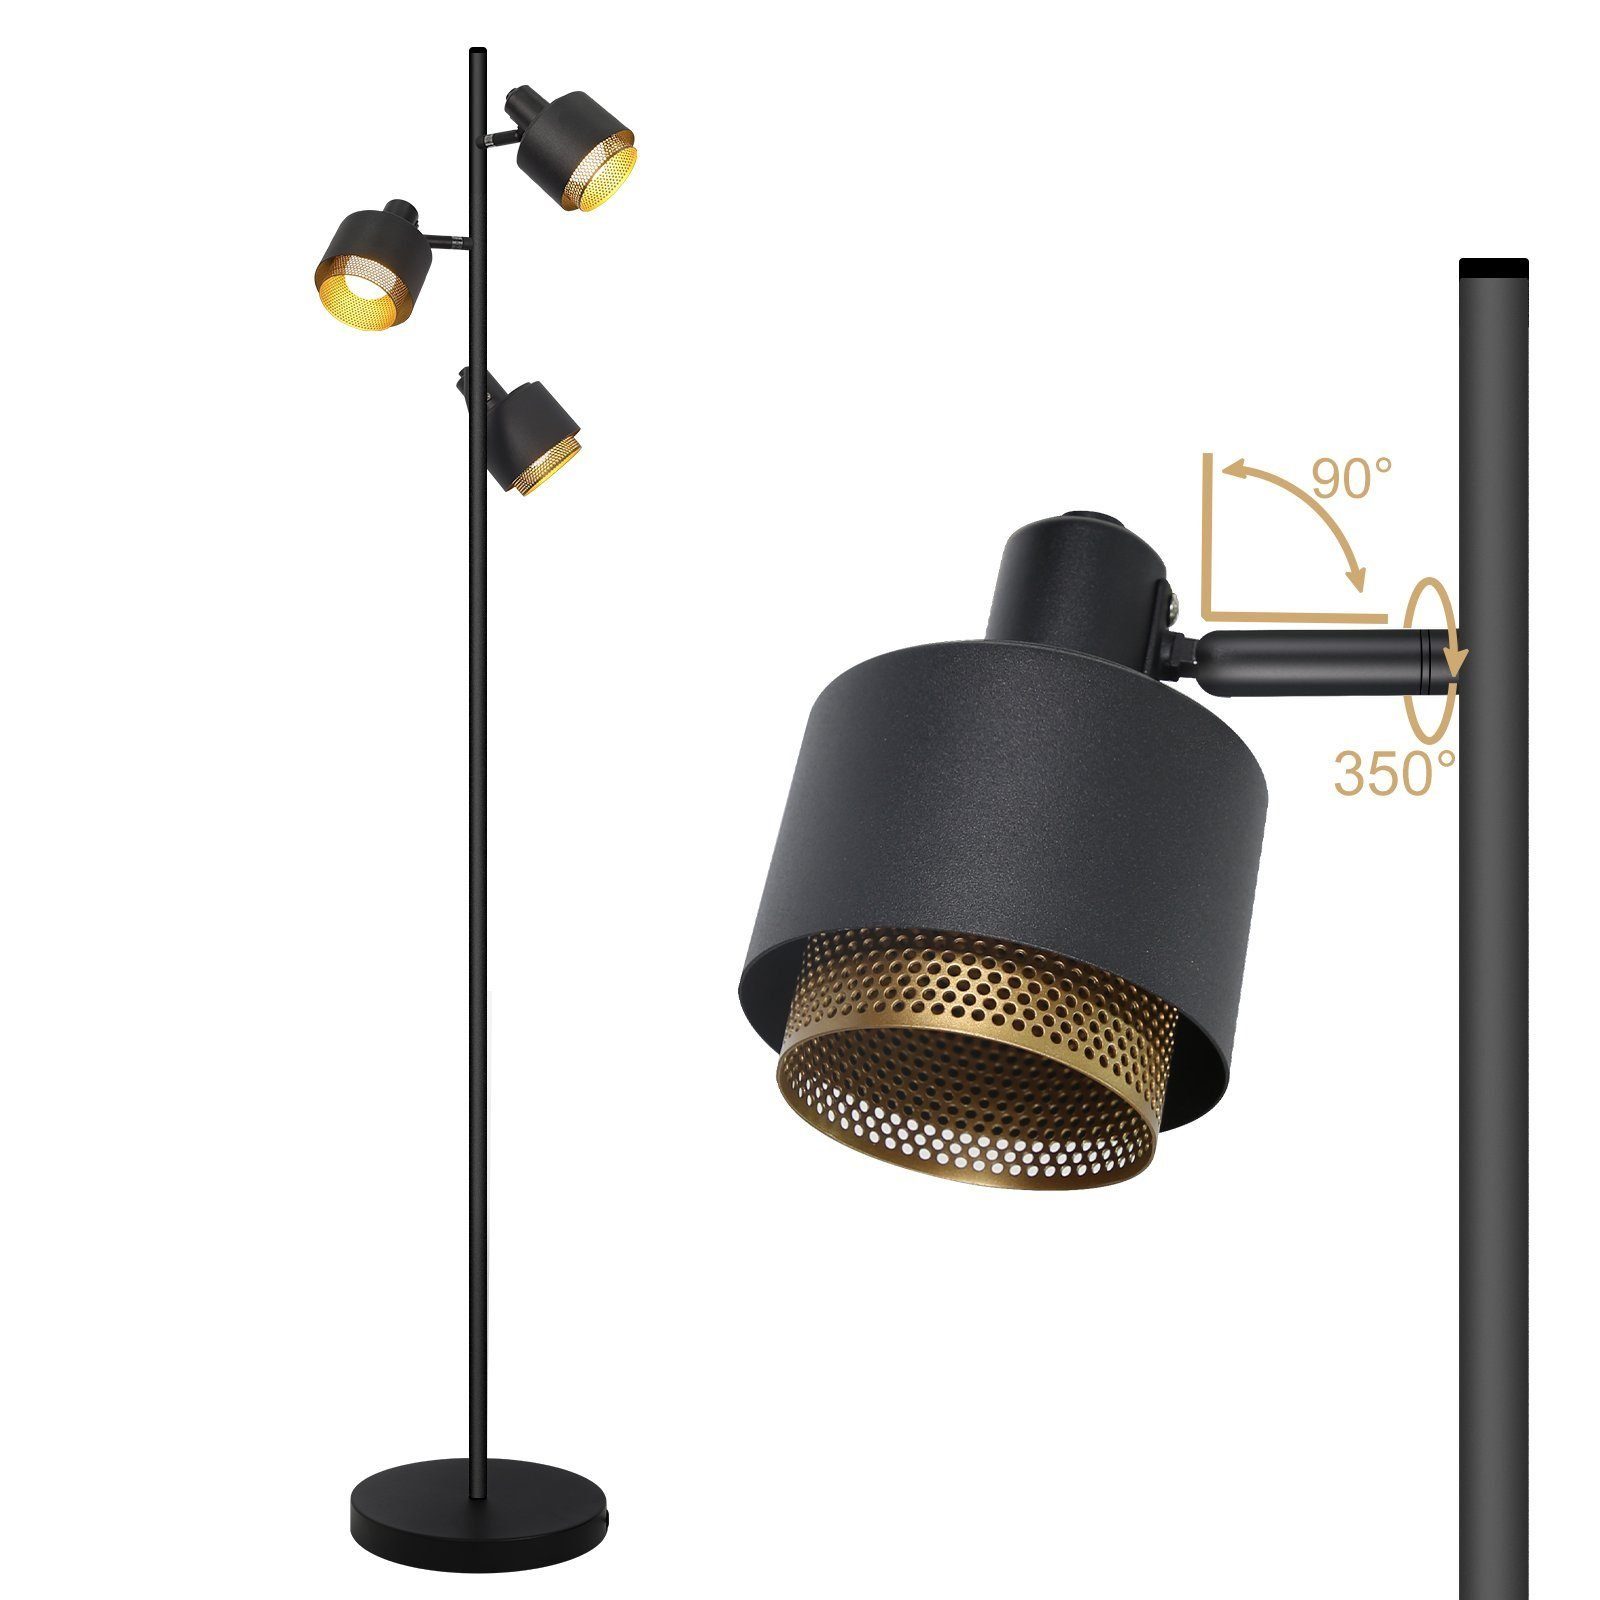 Nettlife Stehlampe Schwarz-gold E14 Industrial 153cm, LED wechselbar,  drehbare